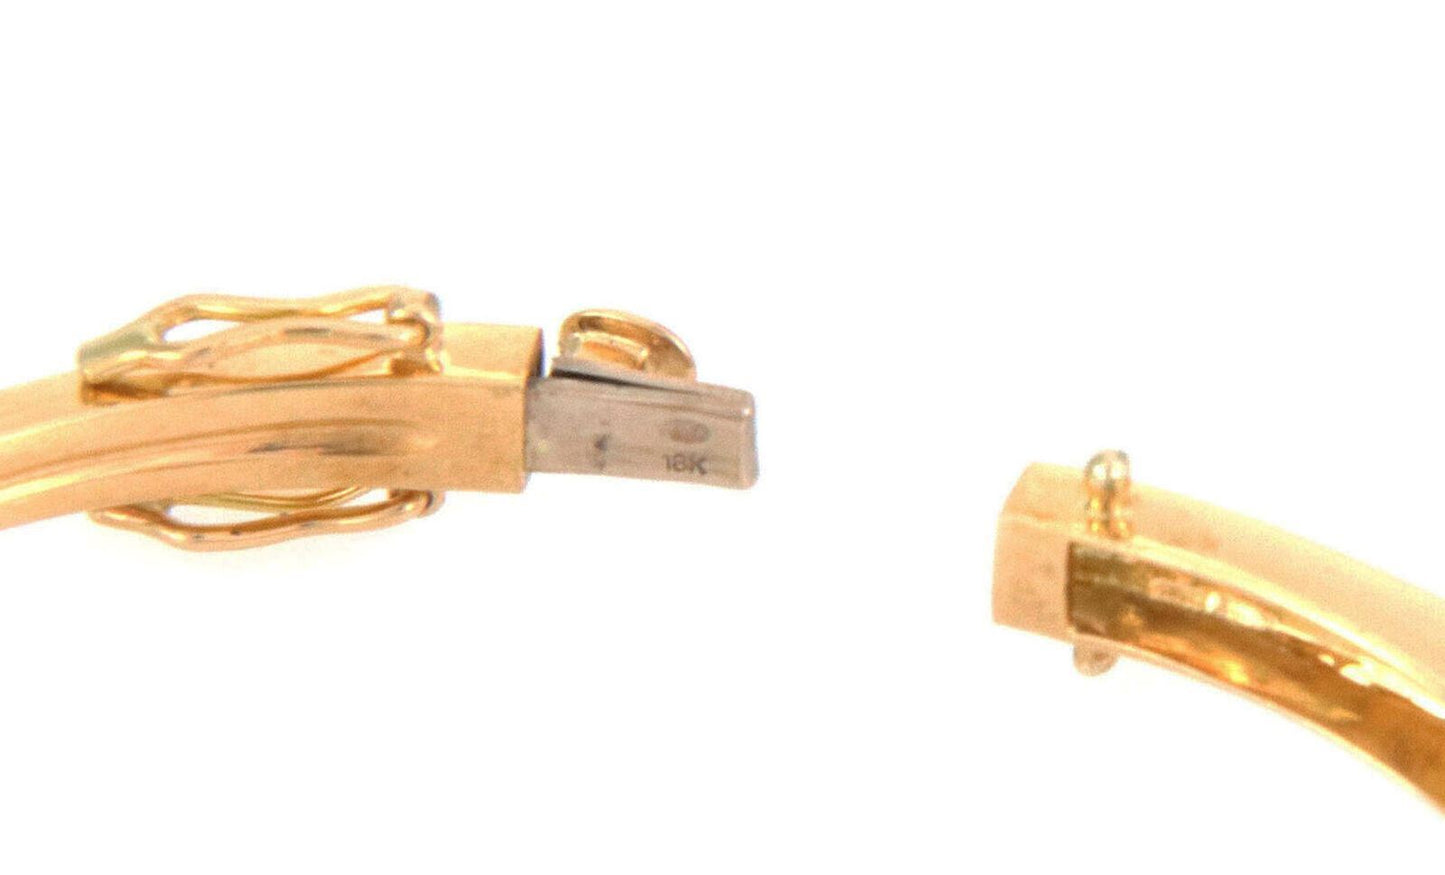 Guy Laroche Diamond & Gems 18k Yellow Gold Bangle Bracelet